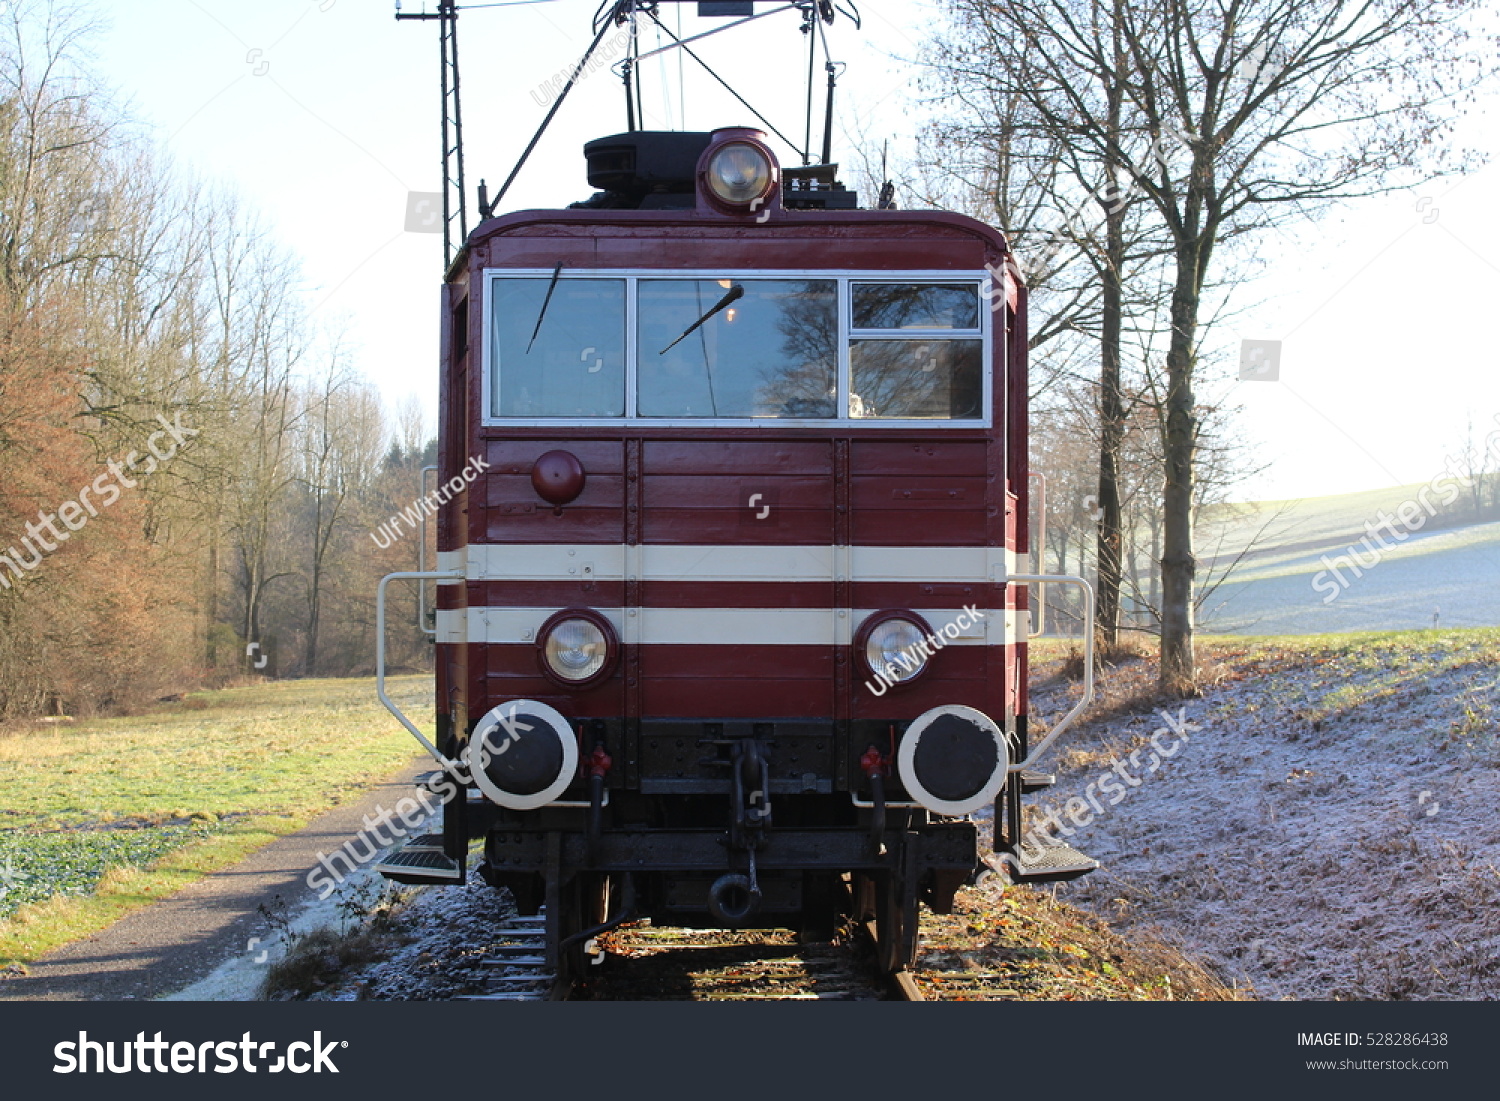 Locomotive #528286438